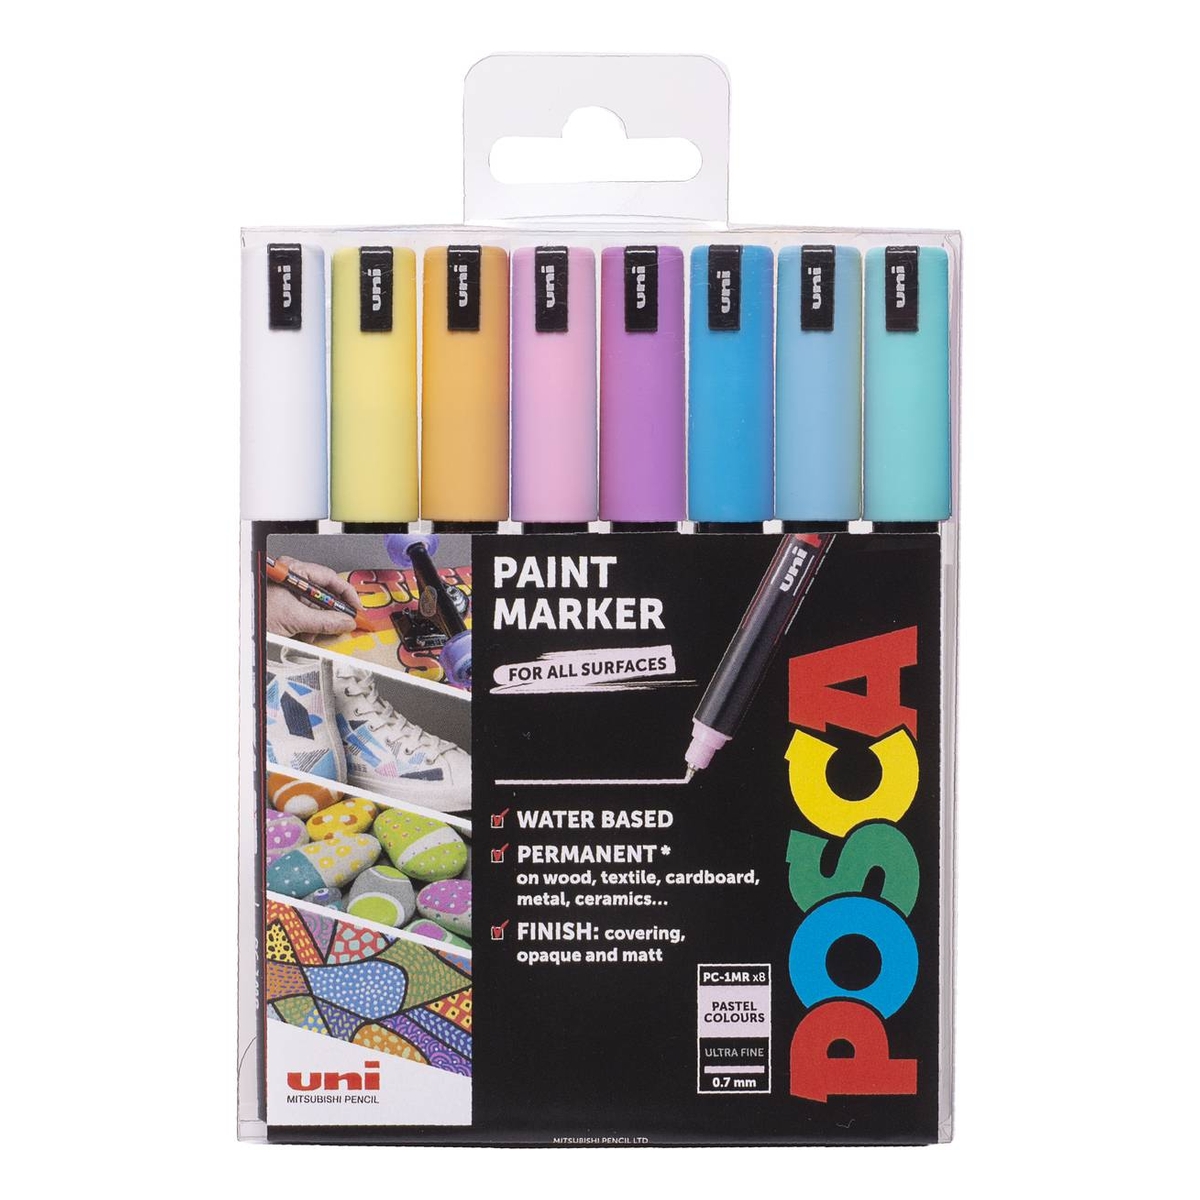 The new POSCA Pastel range is out now! Available at Cult Pens easichalk.com  Hobbycraft #POSCAPastels #POSCA #PenArt #Doodles #PaintPen #POSCAart, By POSCA UK